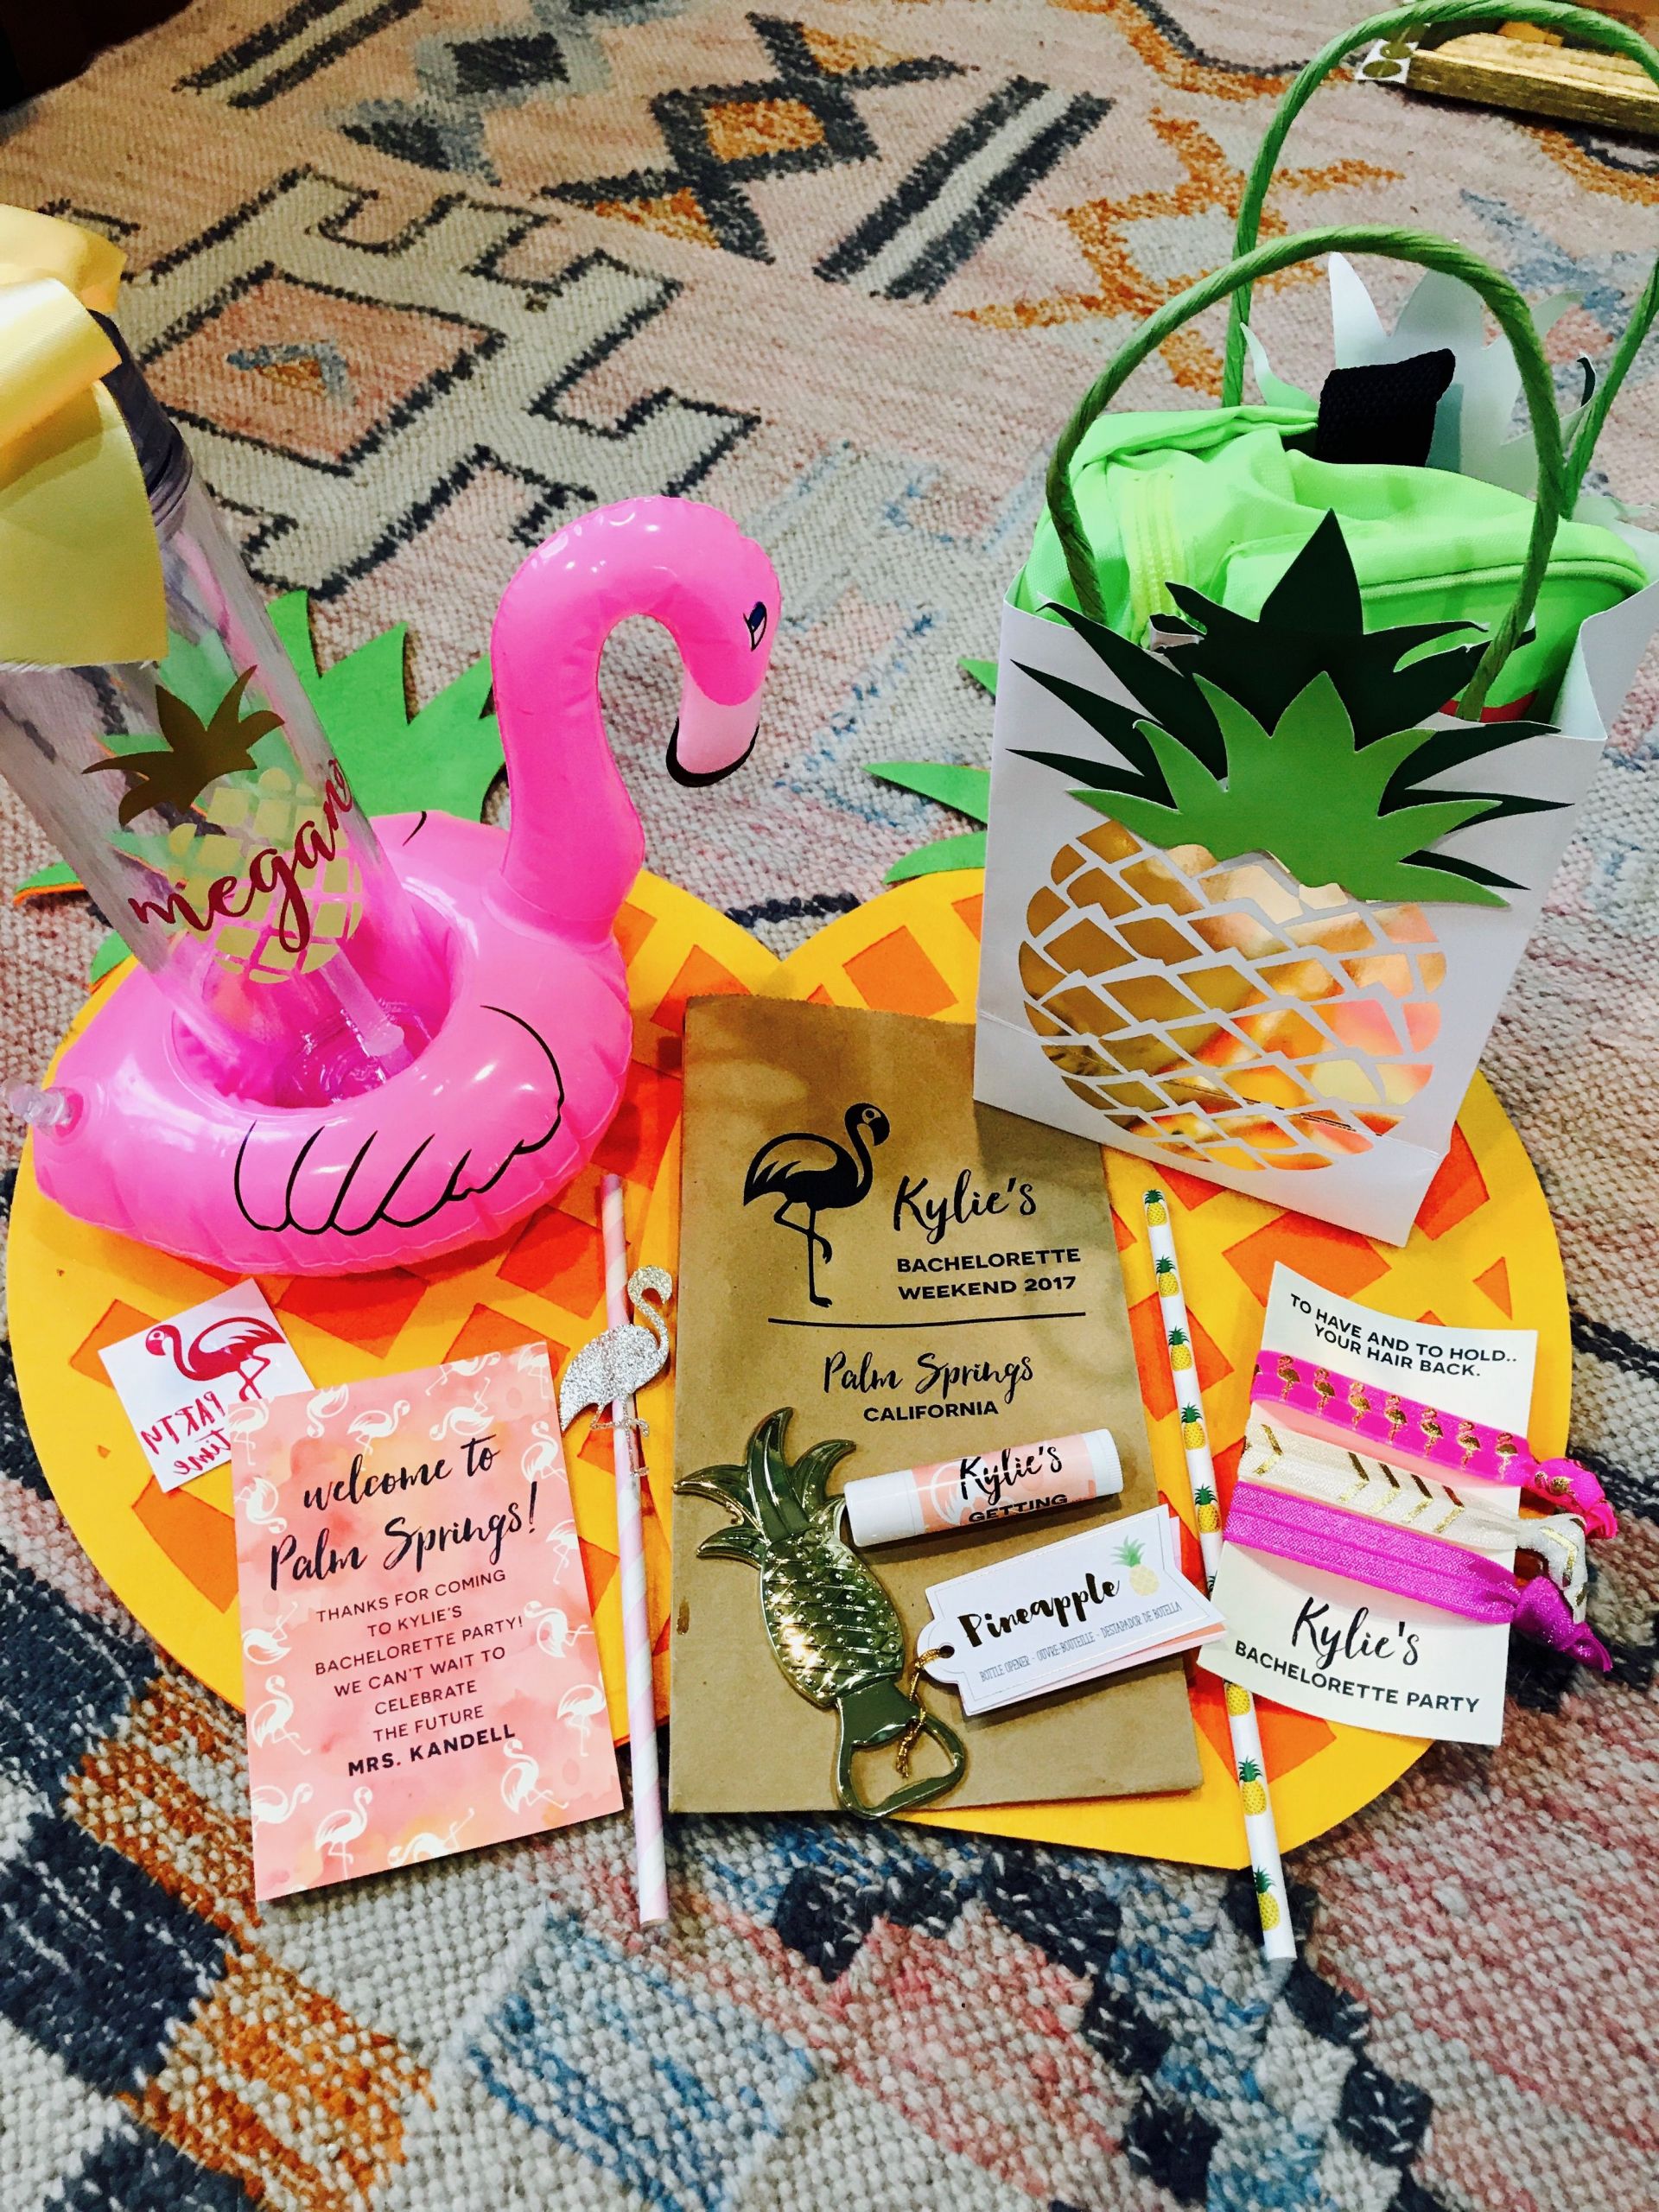 Palm Springs Bachelorette Party Ideas
 Palm Springs Flamingle Bachelorette Party Gift bags